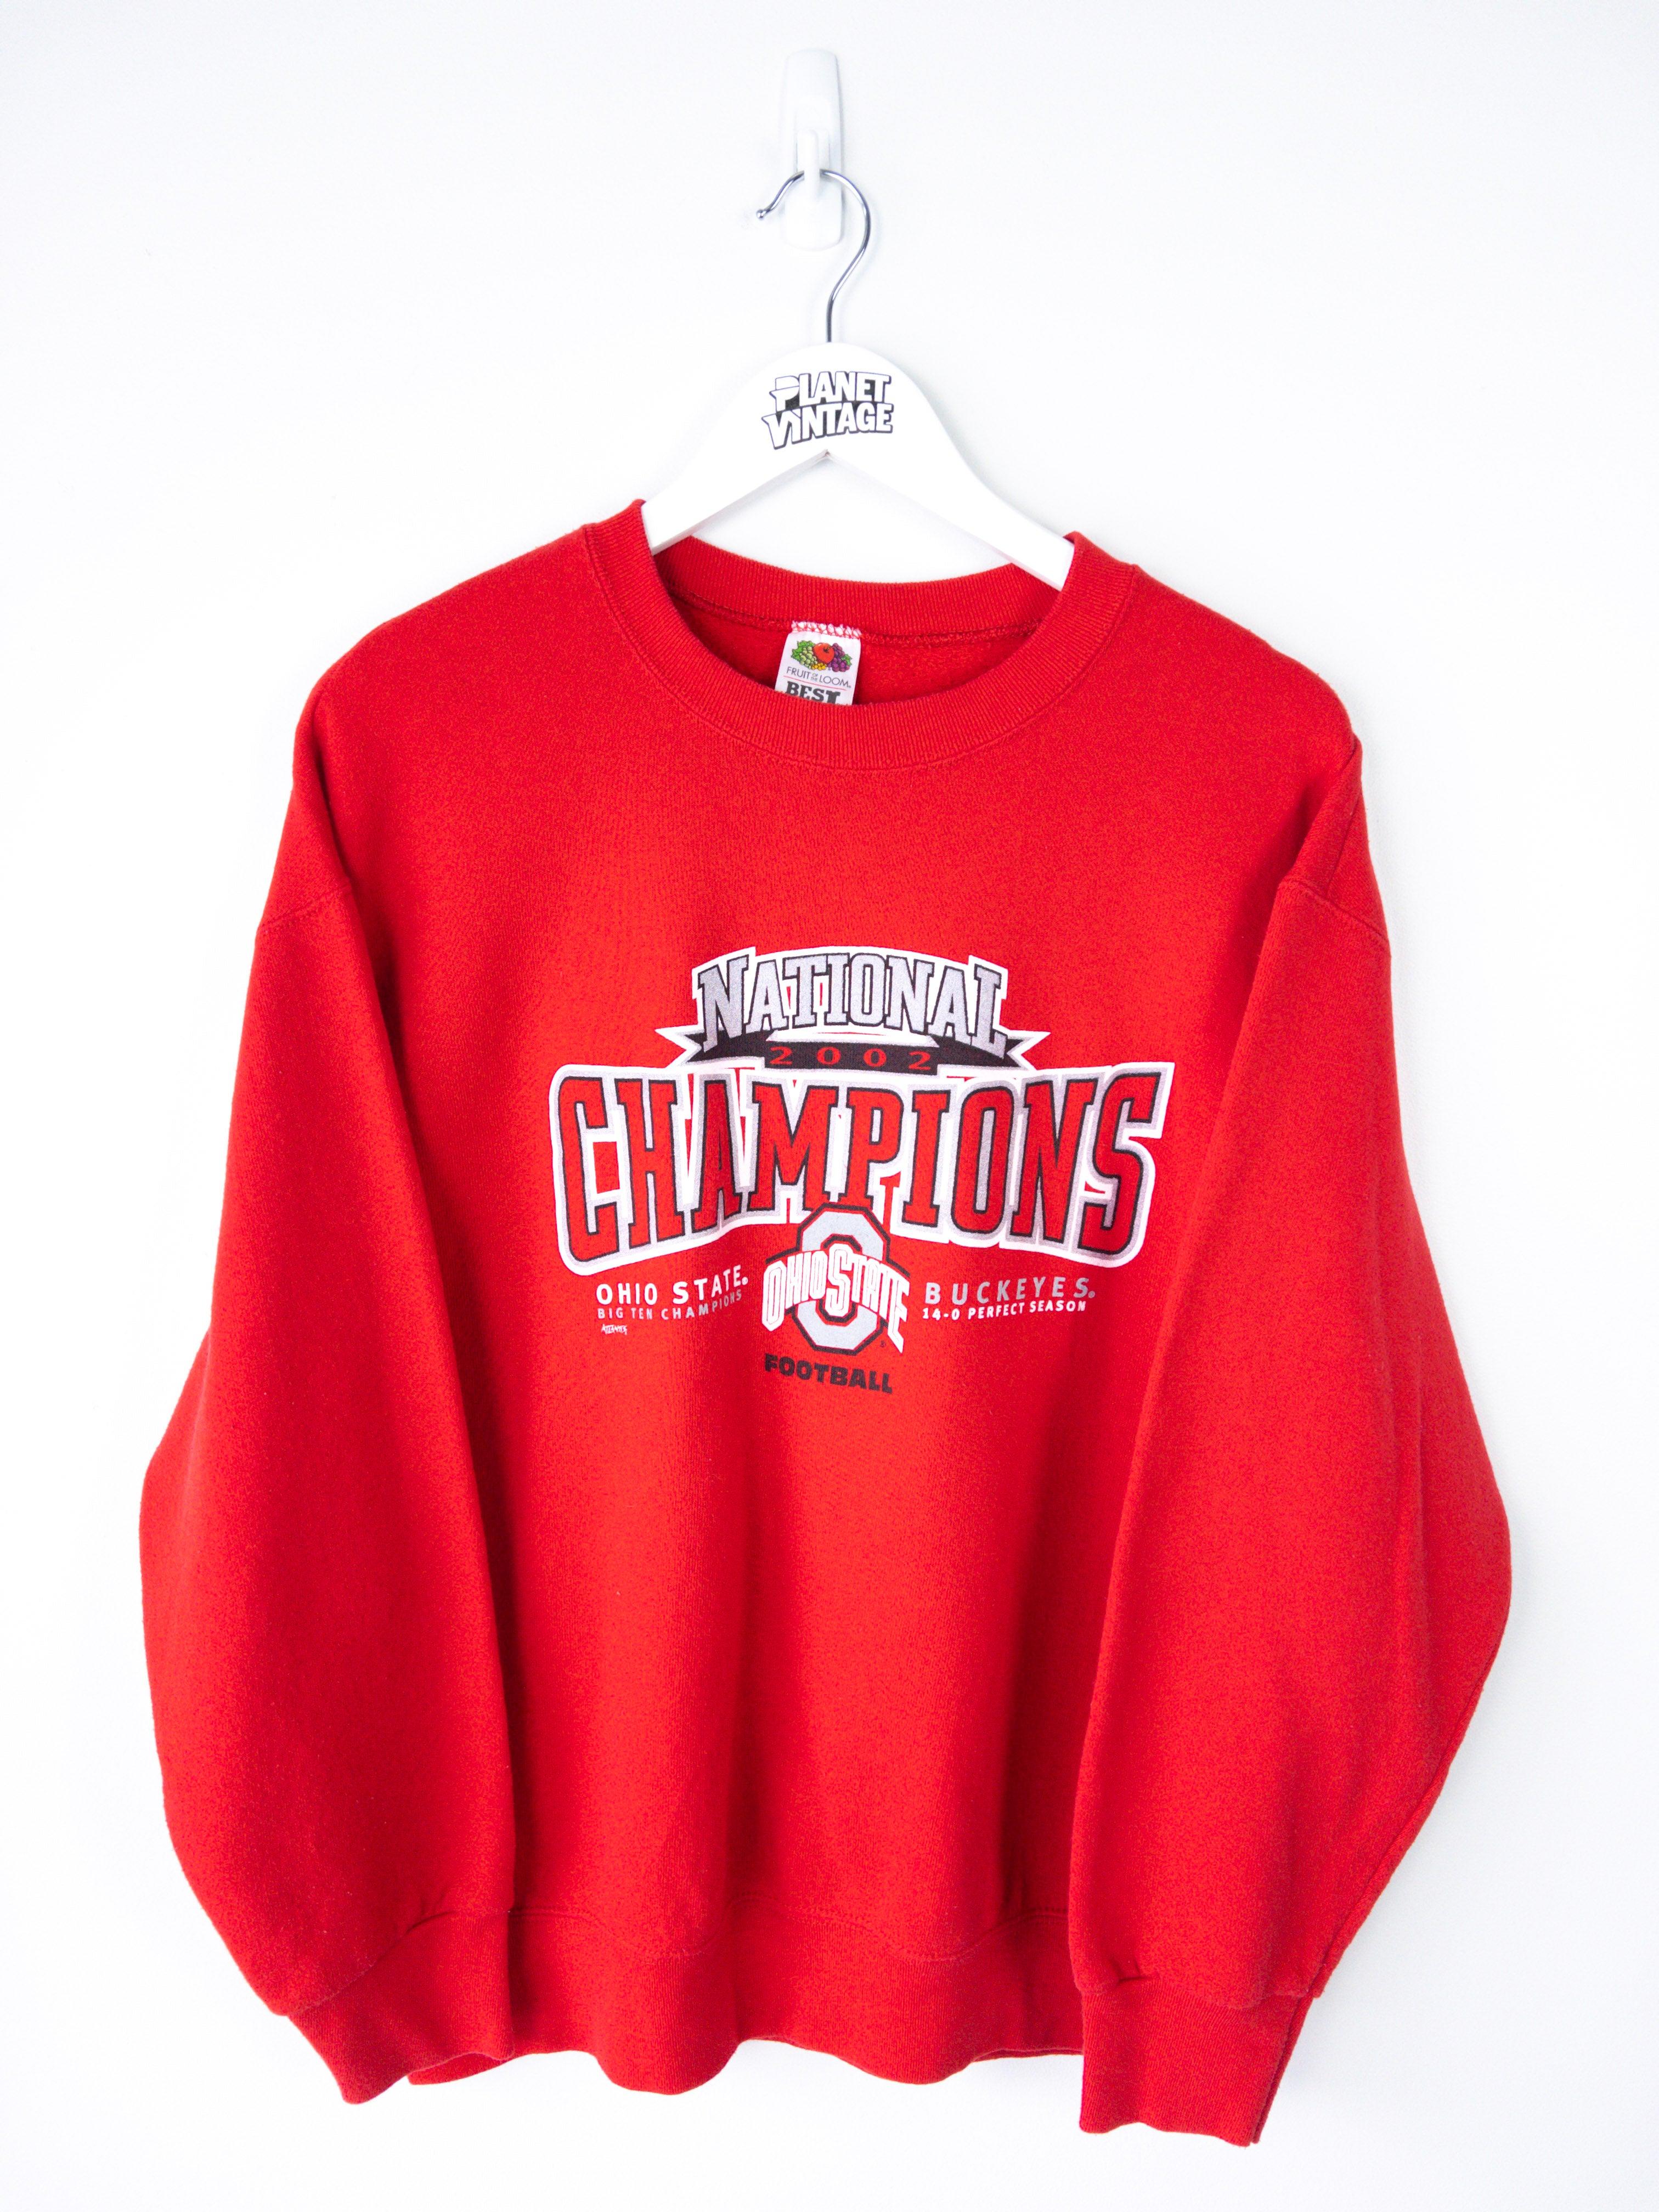 Ohio State Buckeyes Champs 2002 Sweatshirt (L) - Planet Vintage Store